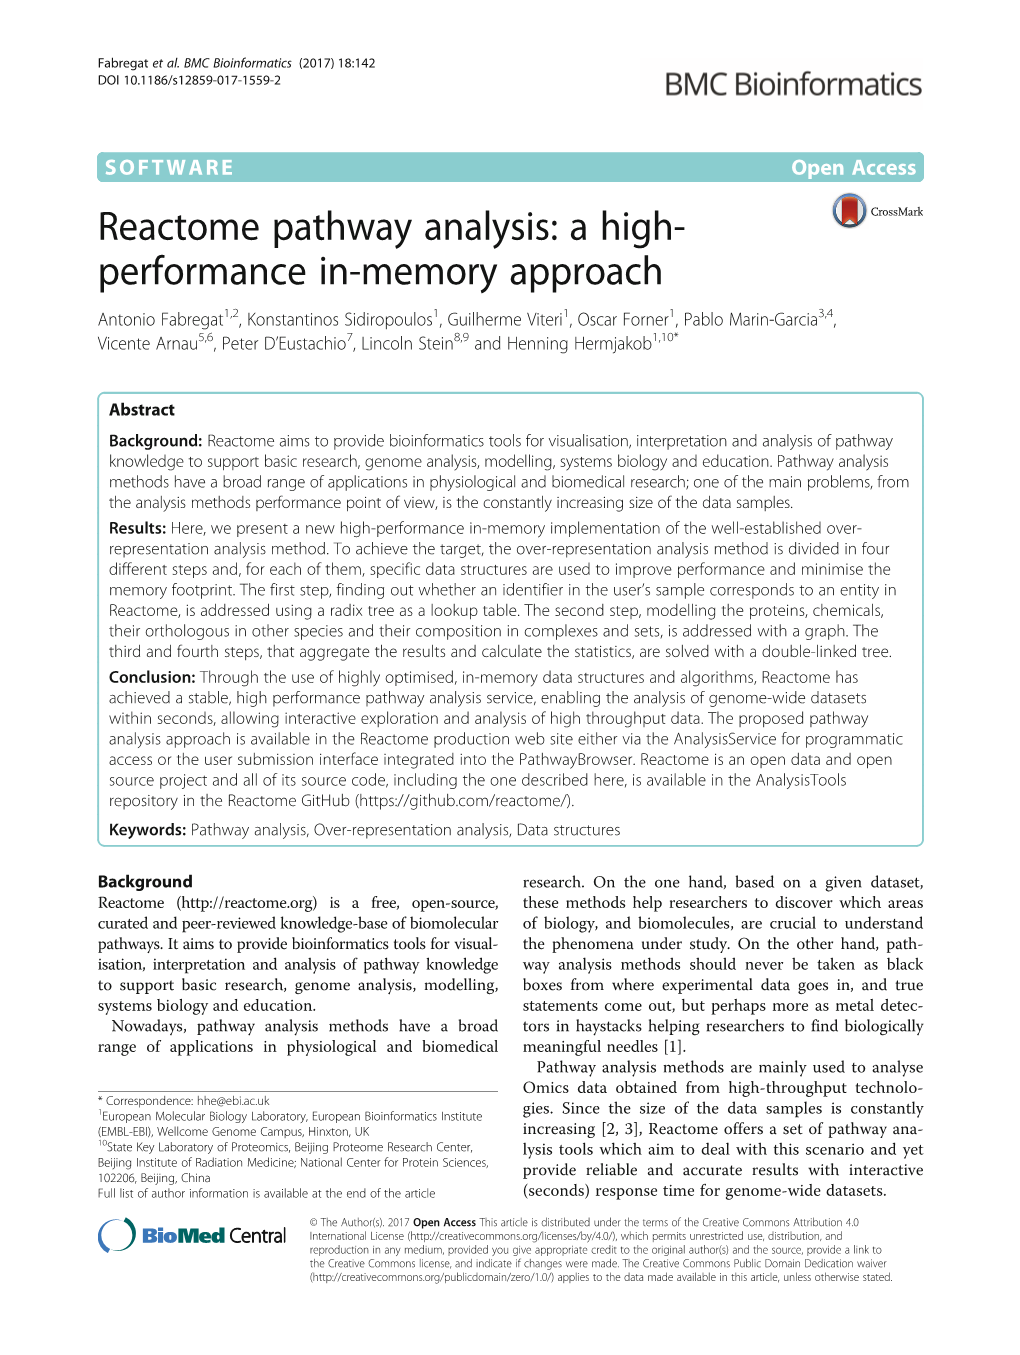 Reactome Pathway Analysis